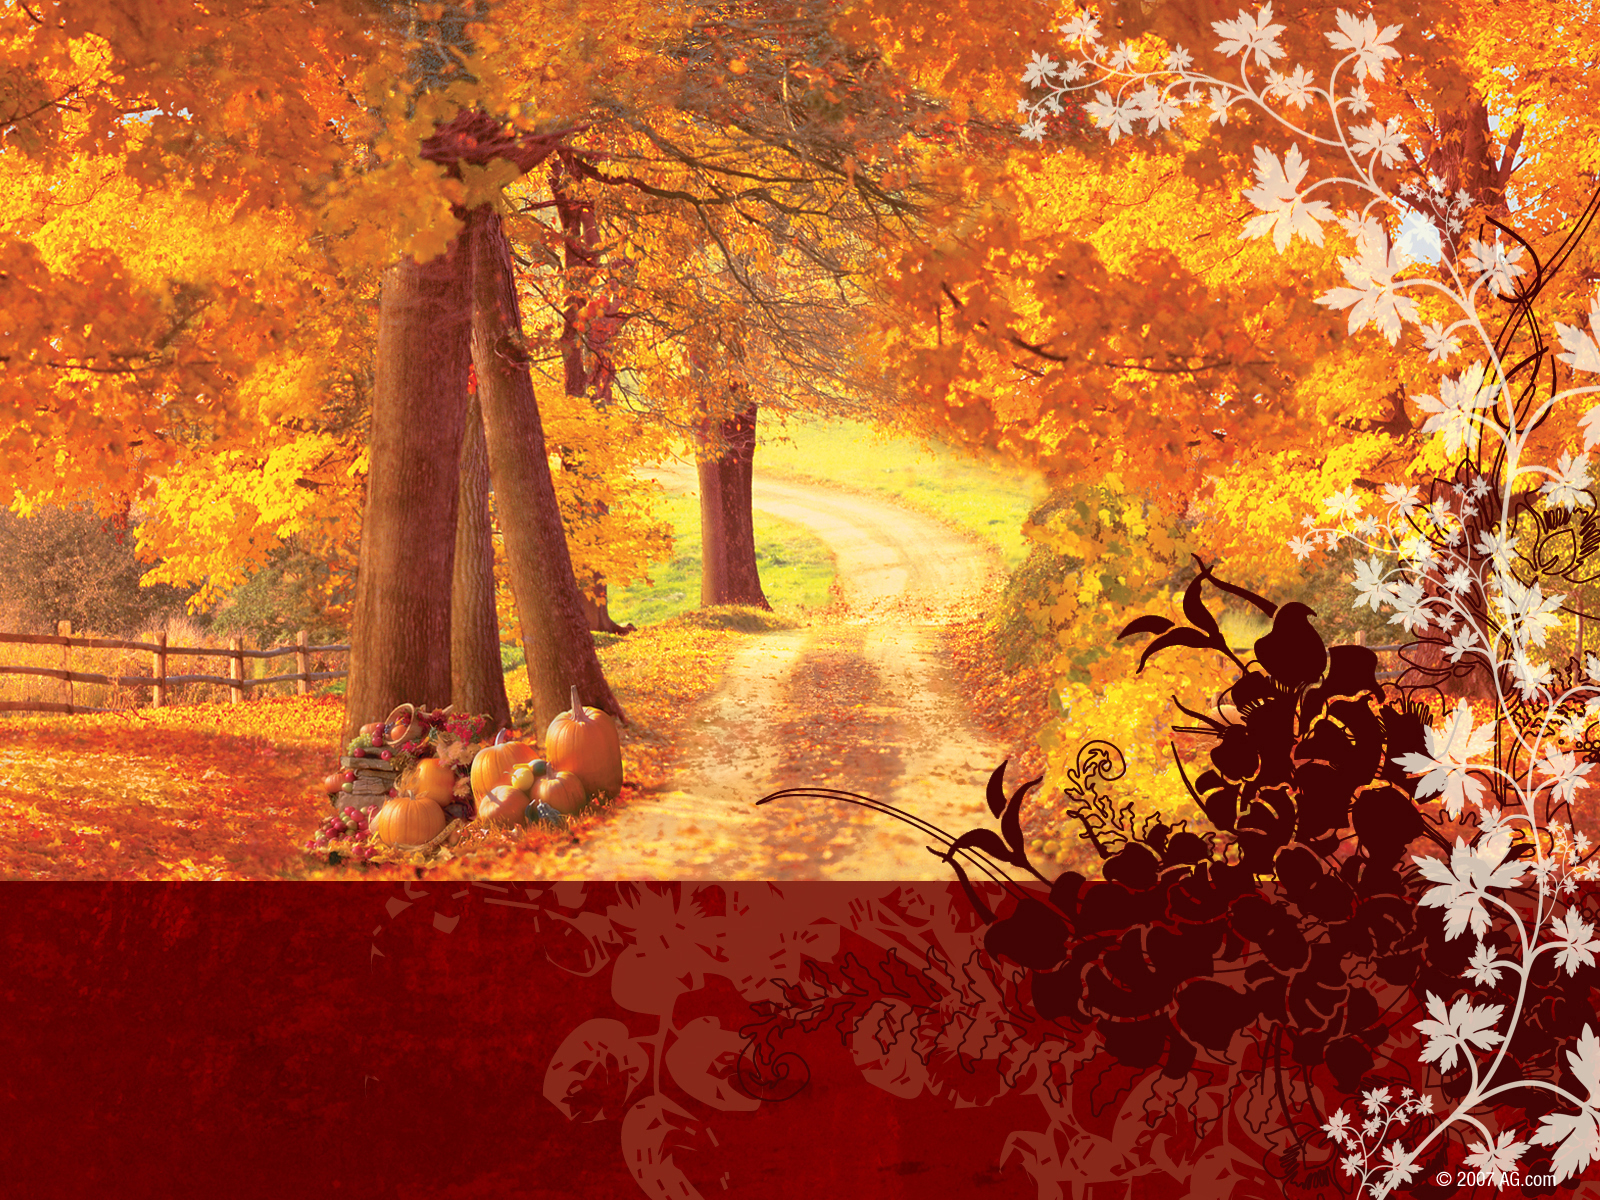 Autumn Idyllic Thanksgiving Wallpaper Avzio